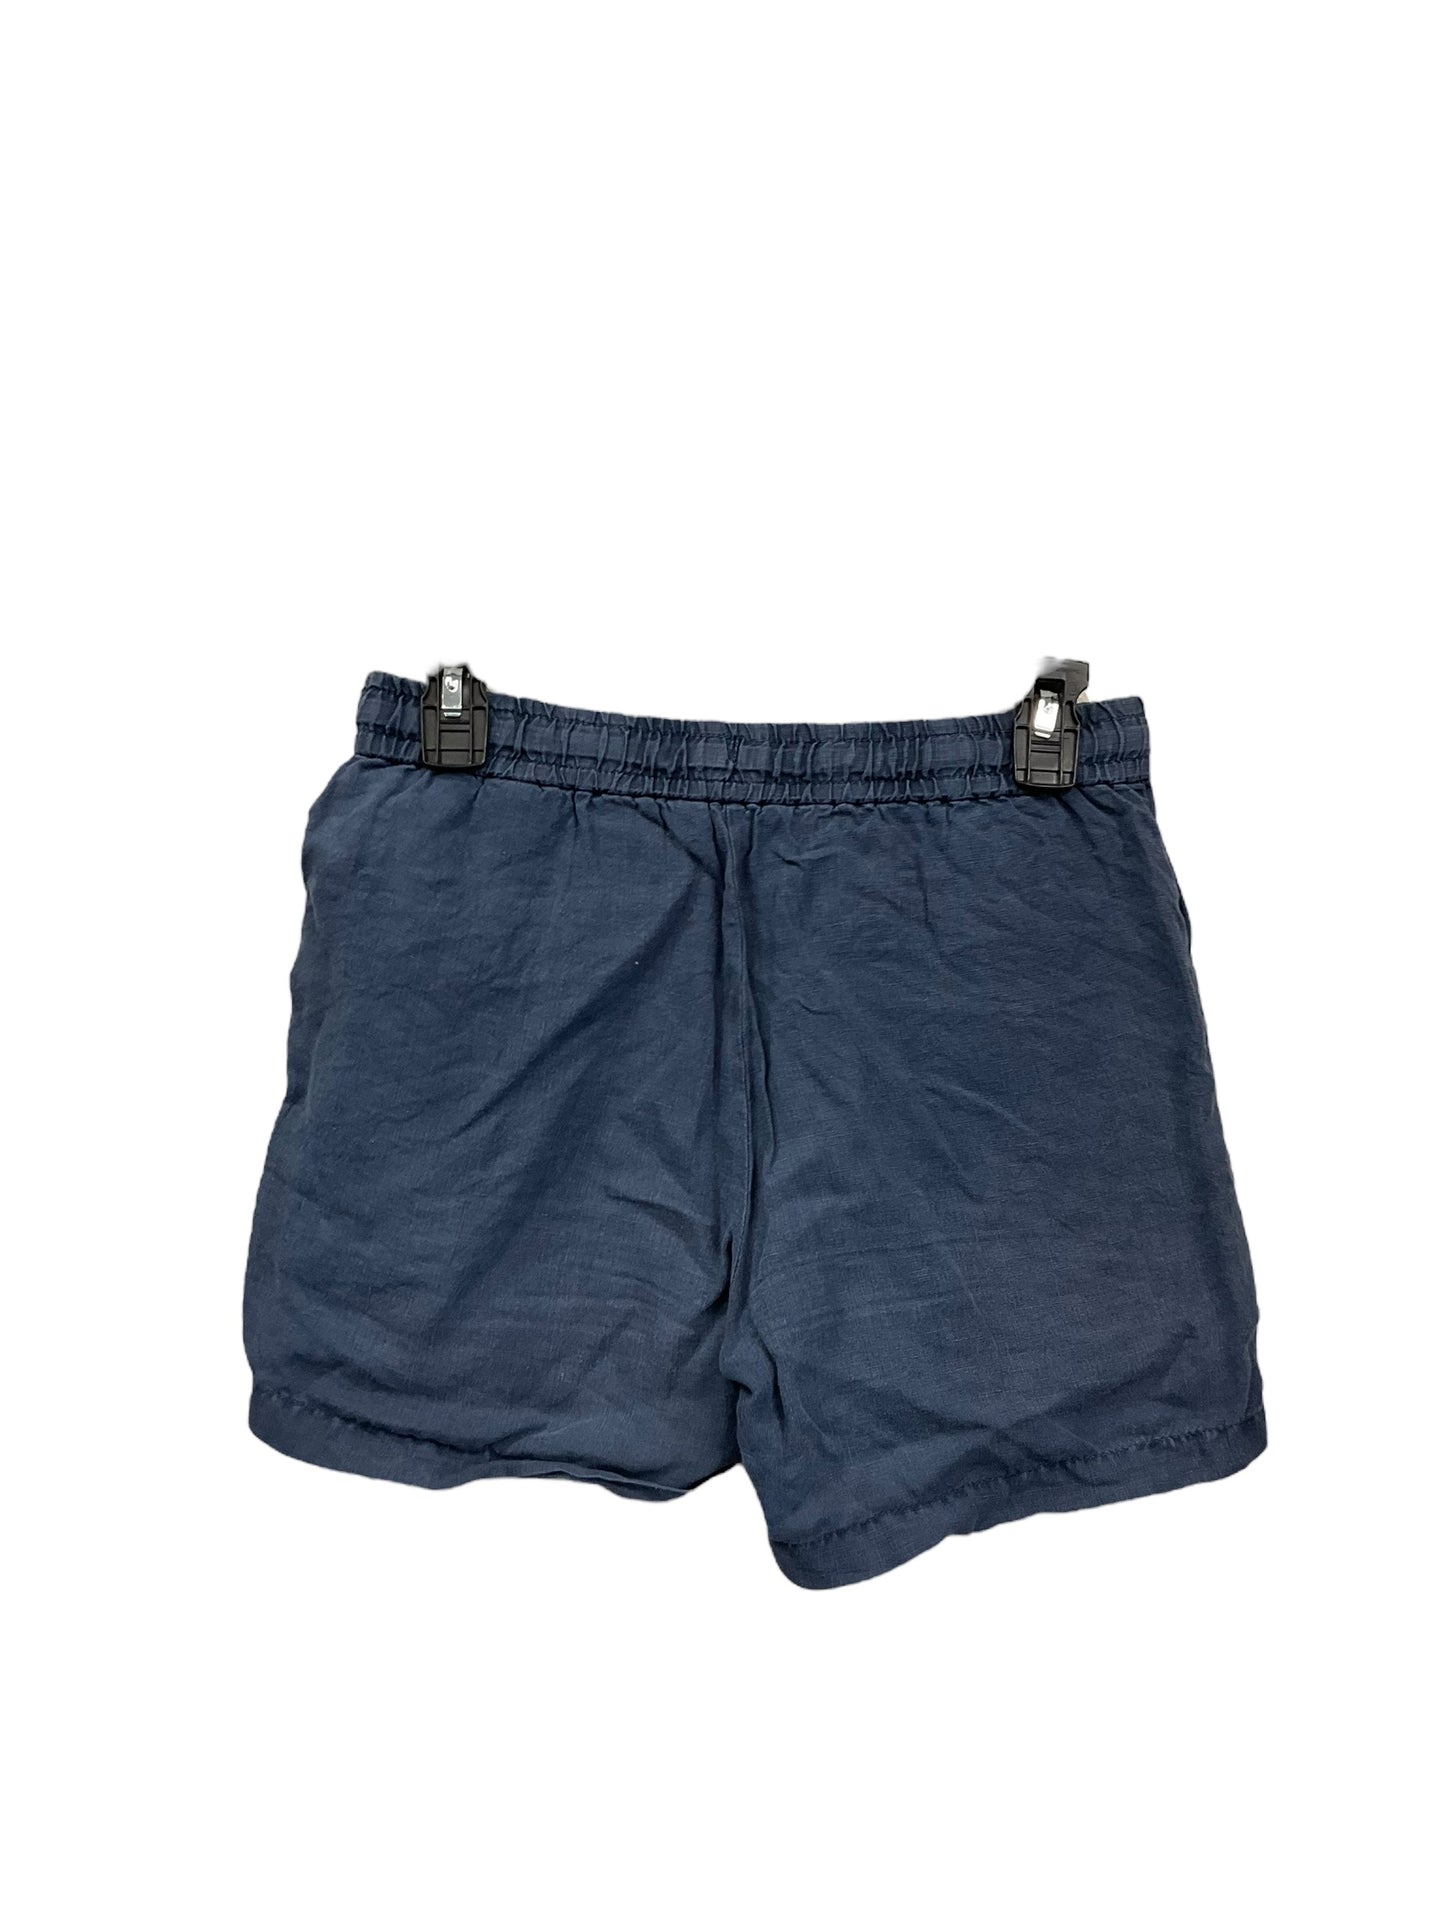 Shorts By Tommy Bahama  Size: Xxs